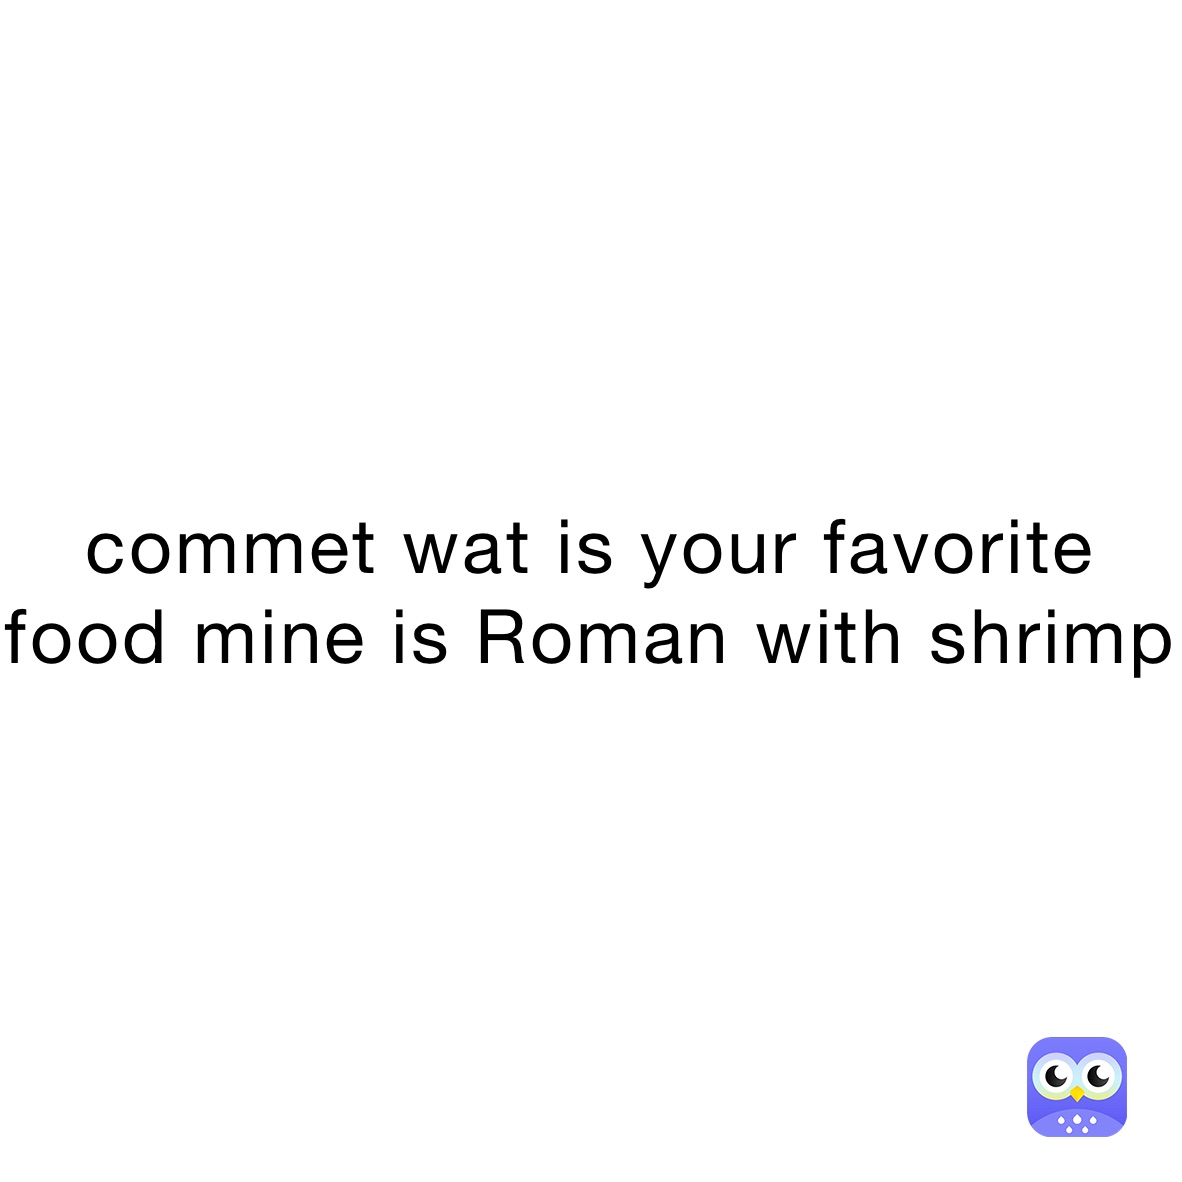 commet wat is your favorite food mine is Roman with shrimp 